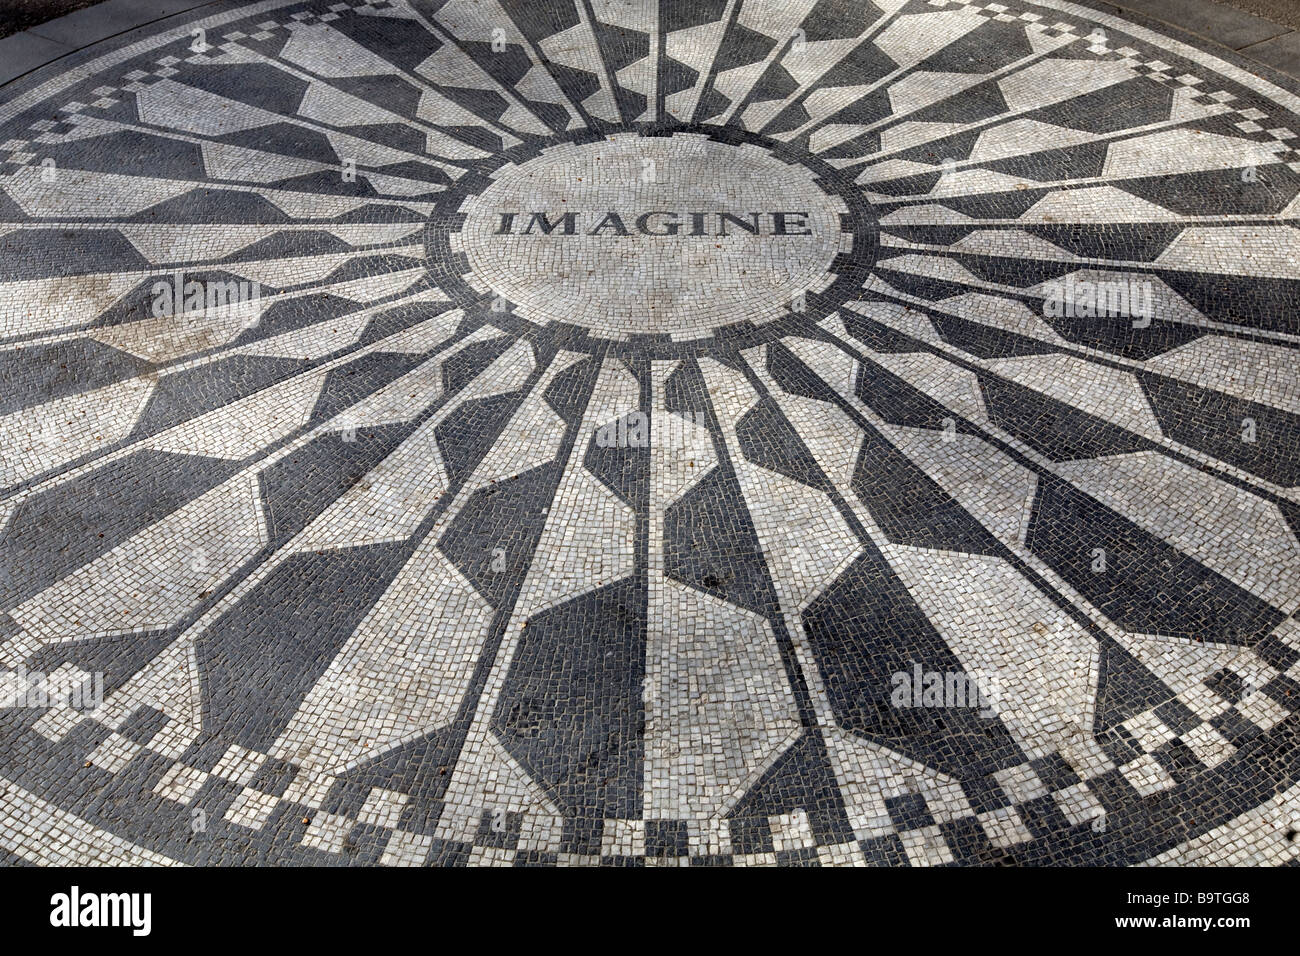 John Lennon's Strawberry Fields in New York City's Central Park, United States. Stock Photo